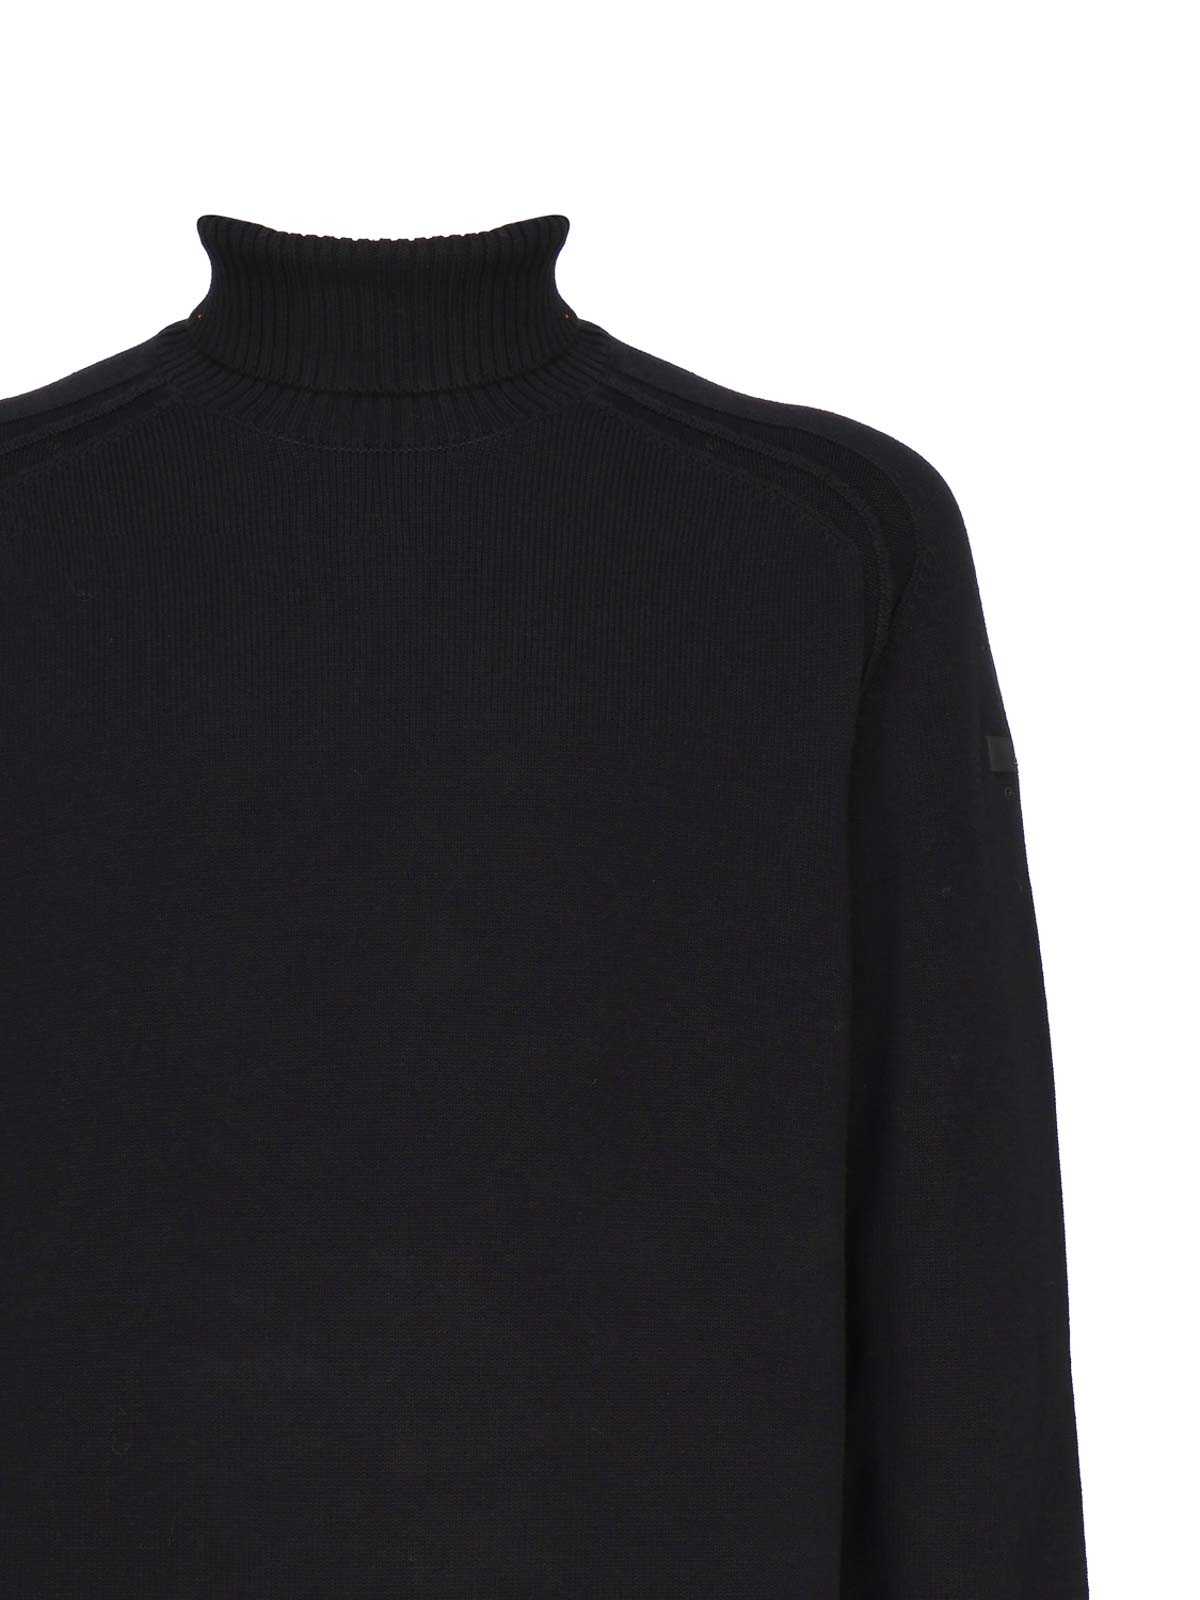 Shop Rrd Roberto Ricci Designs Cotton High Neck In Black